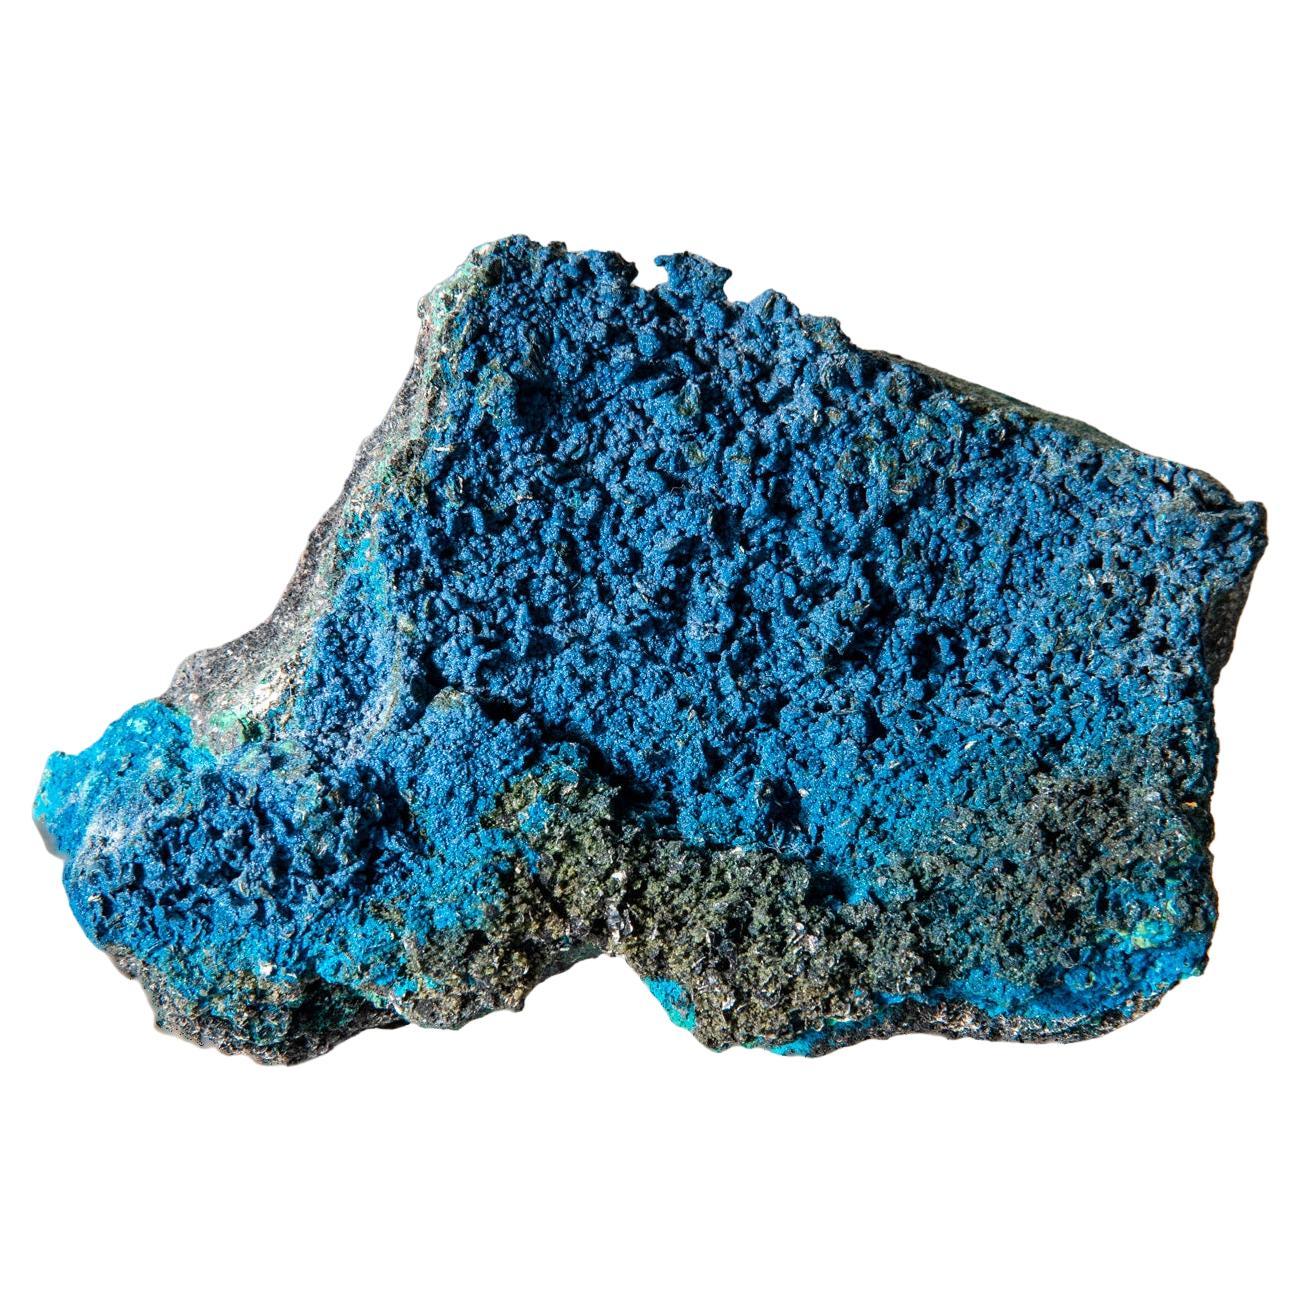 Azurite de la mine de Bou Beker, province d'Errachidia, Maroc